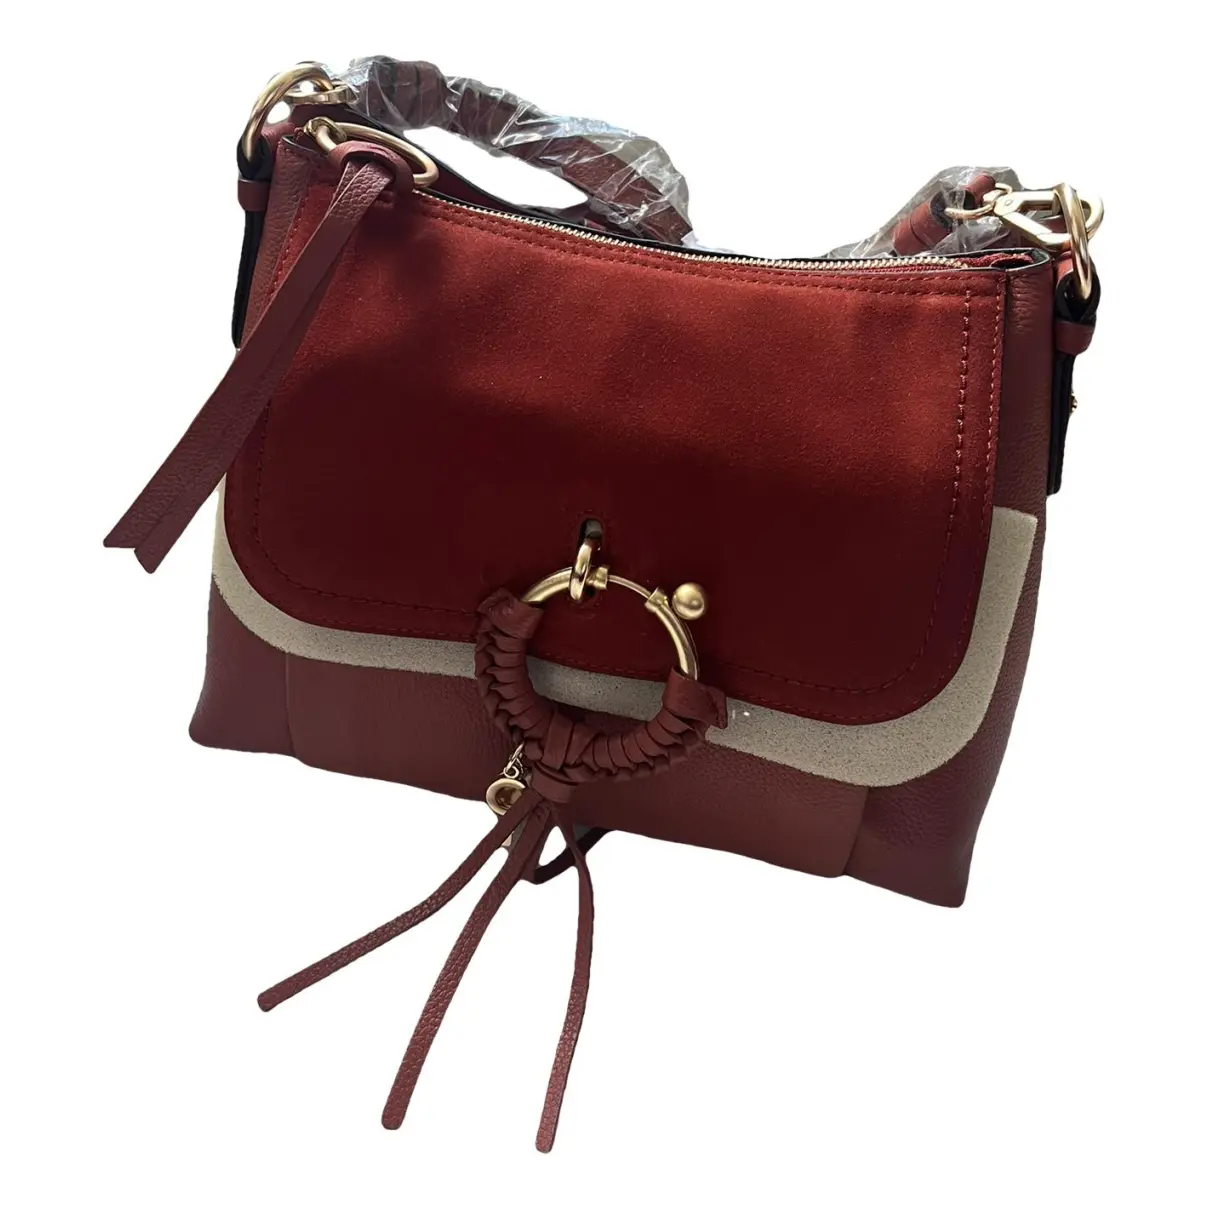 Joan leather handbag